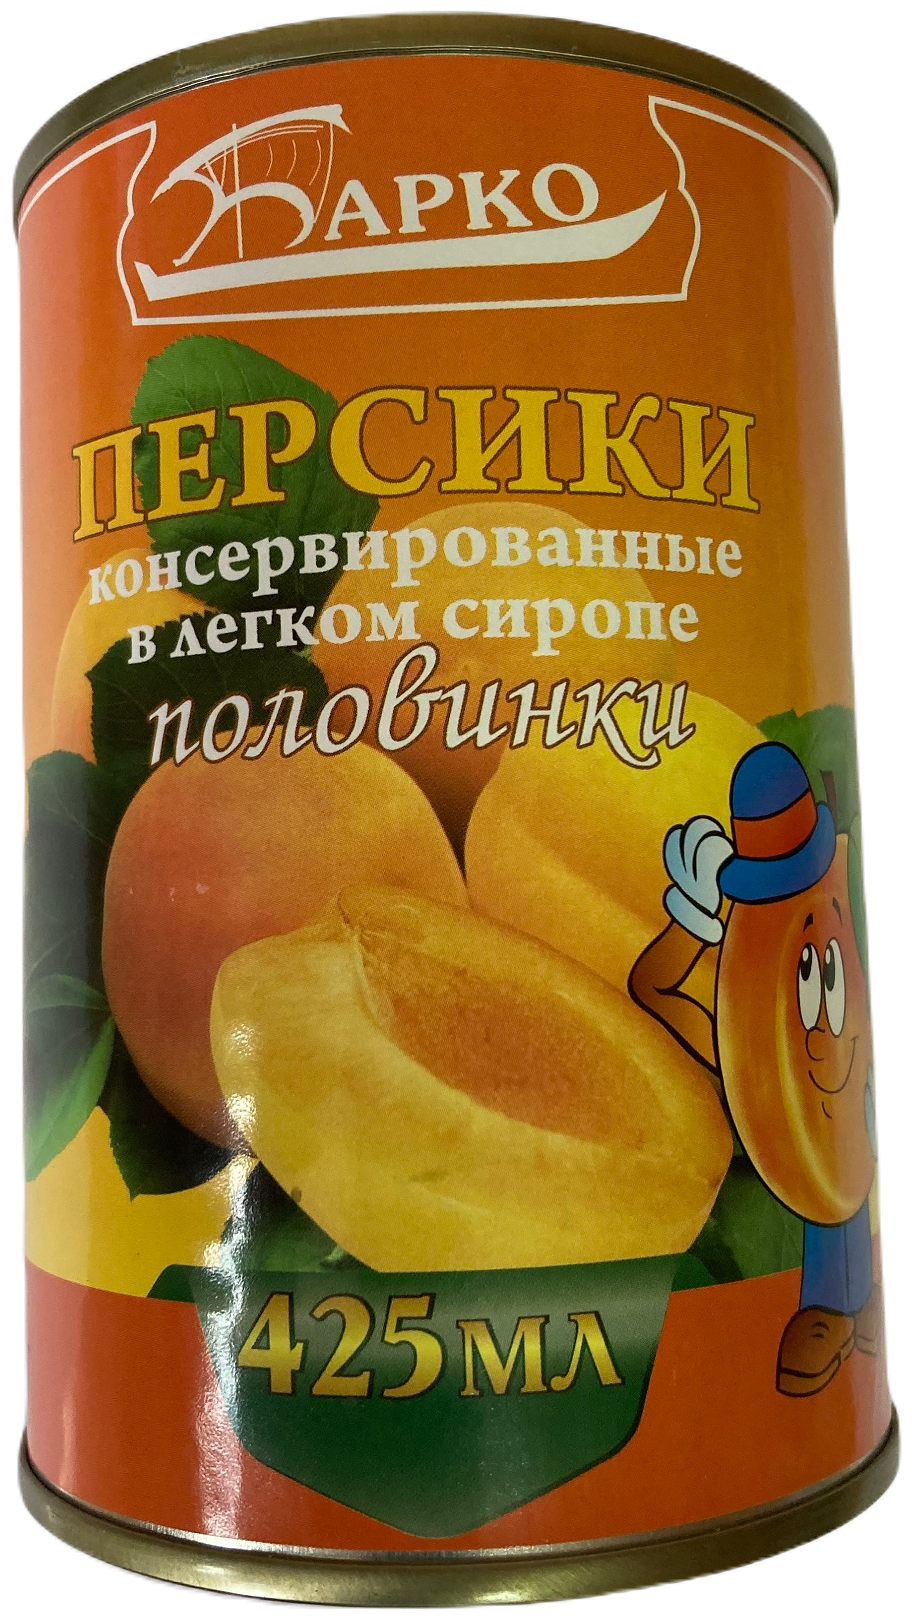 Персики консервированные в легком сиропе половинки, ж/б 425 грамм, Китай (цена указана за 1 единицу товара)